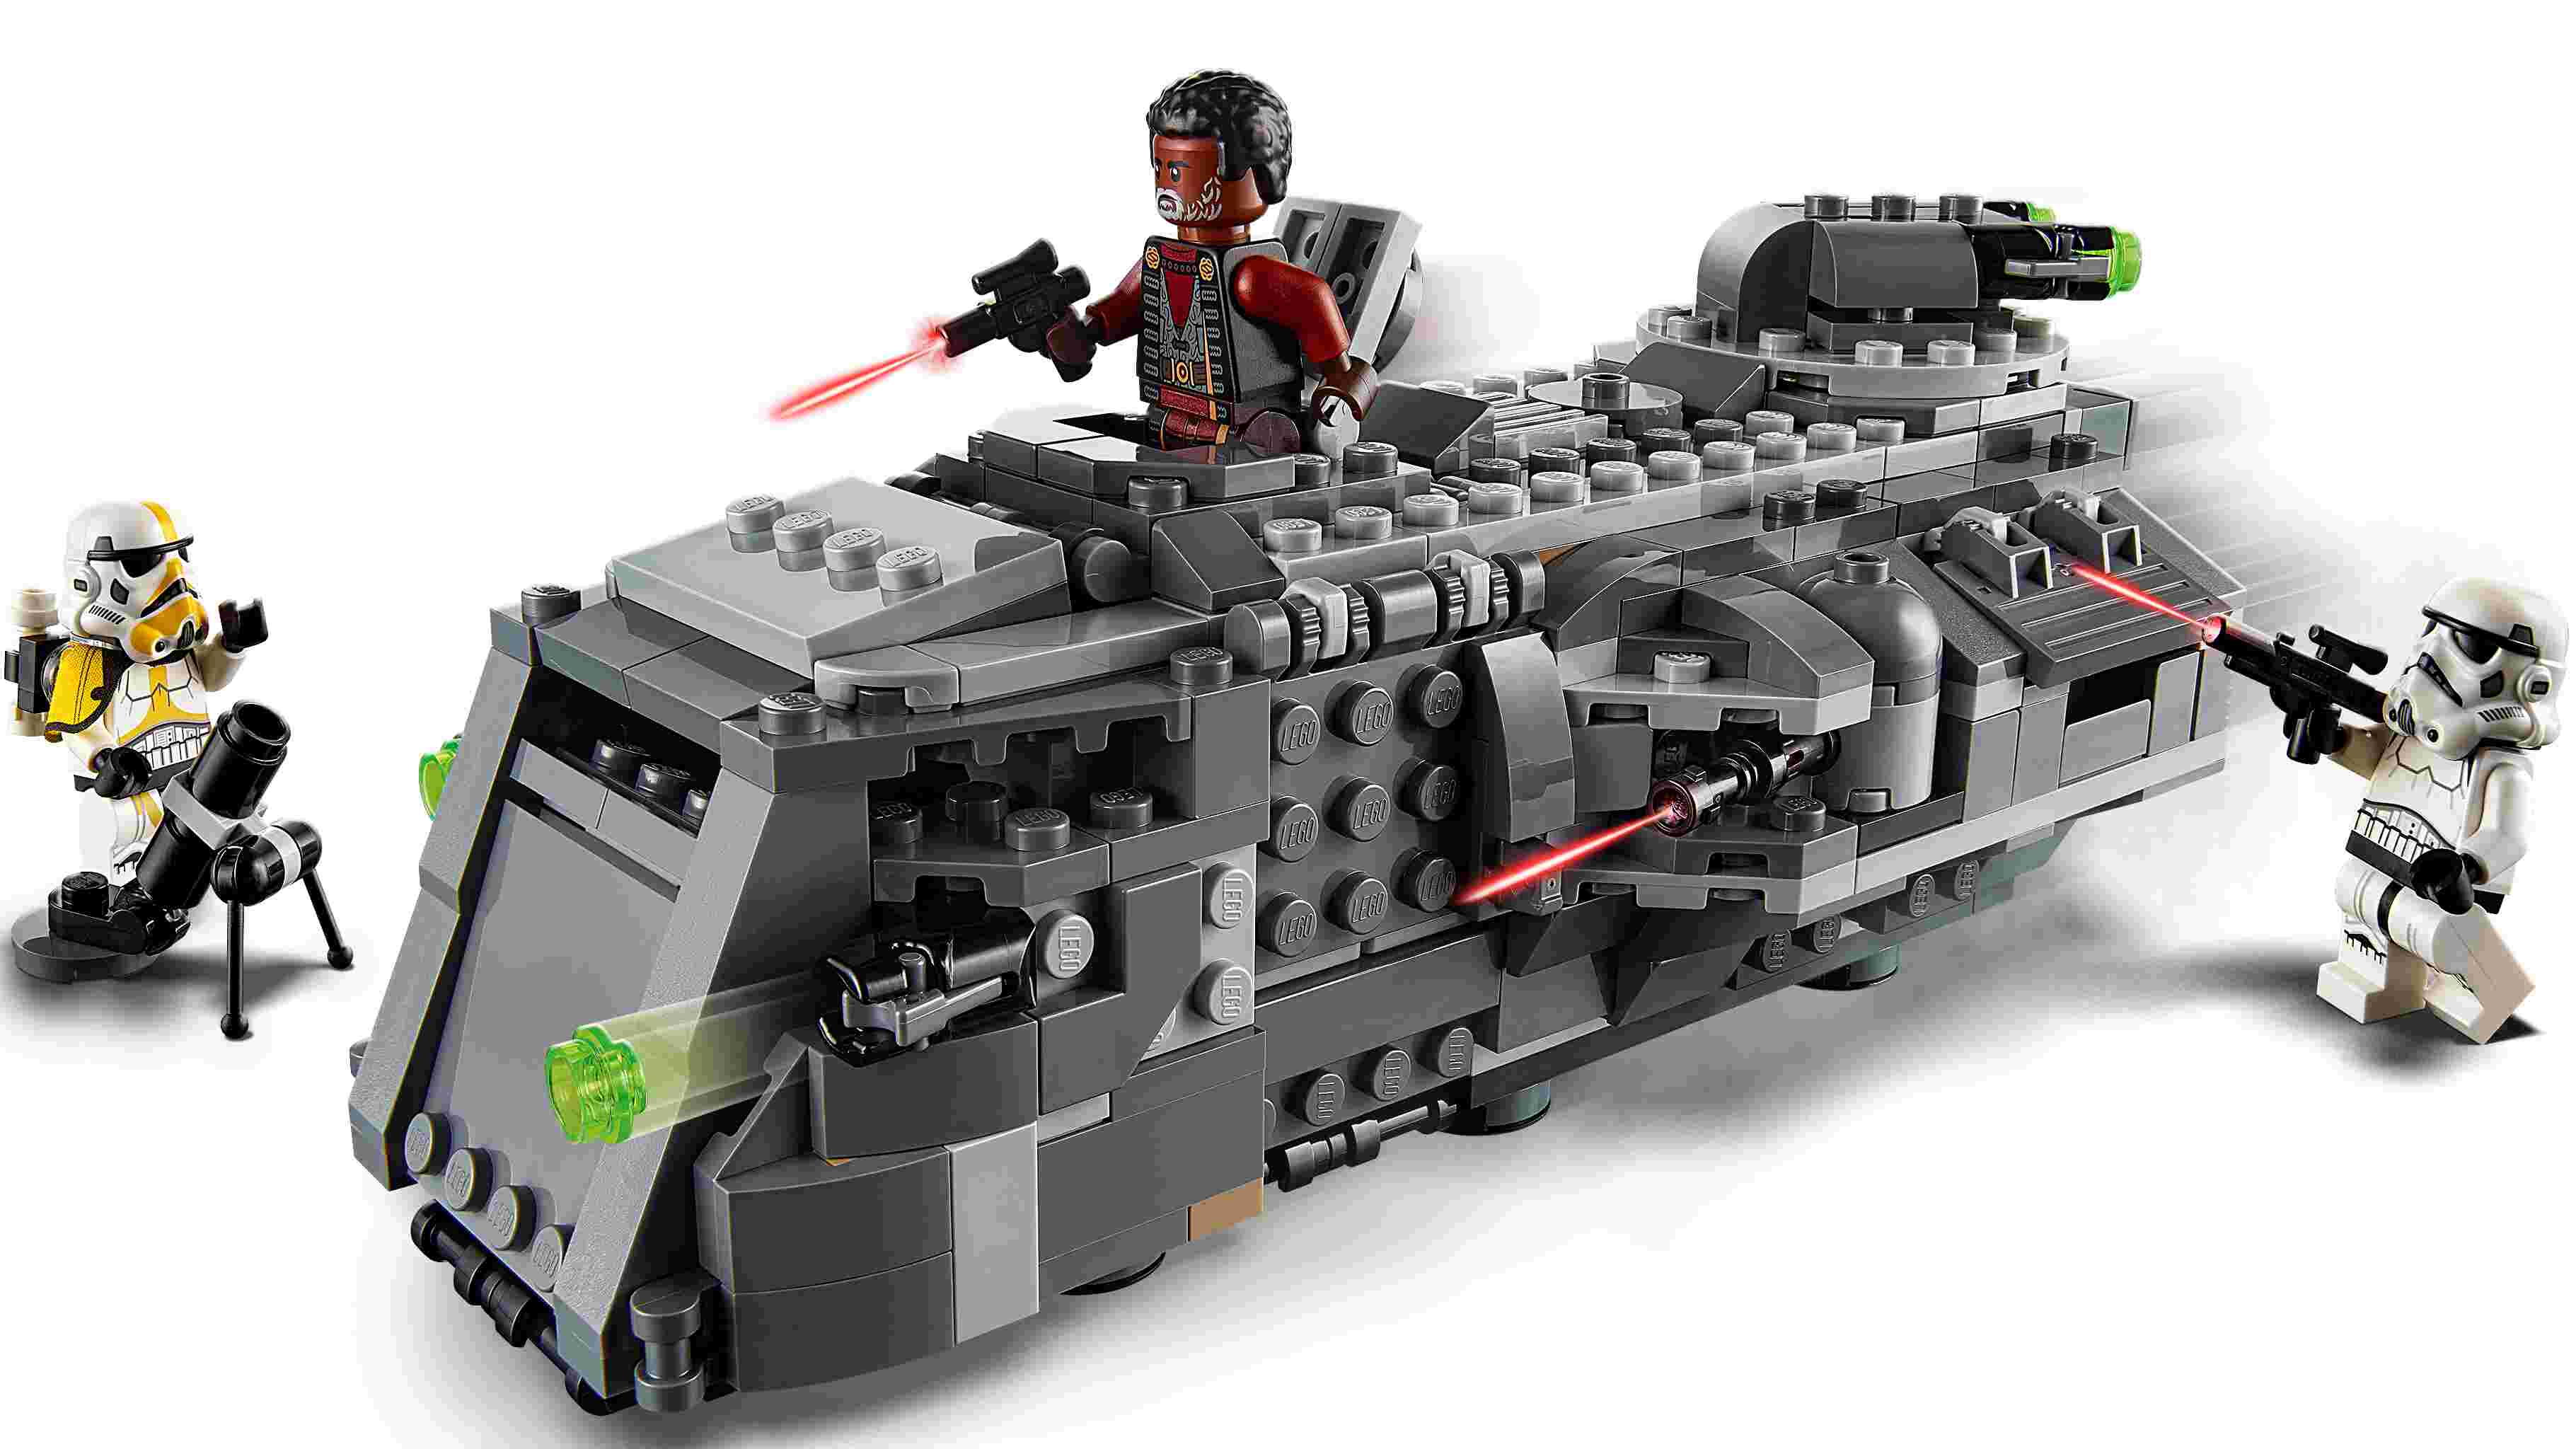 LEGO 75311 Star Wars Imperialer Marauder, Mandalorian-Modell Mit 4 Minifiguren